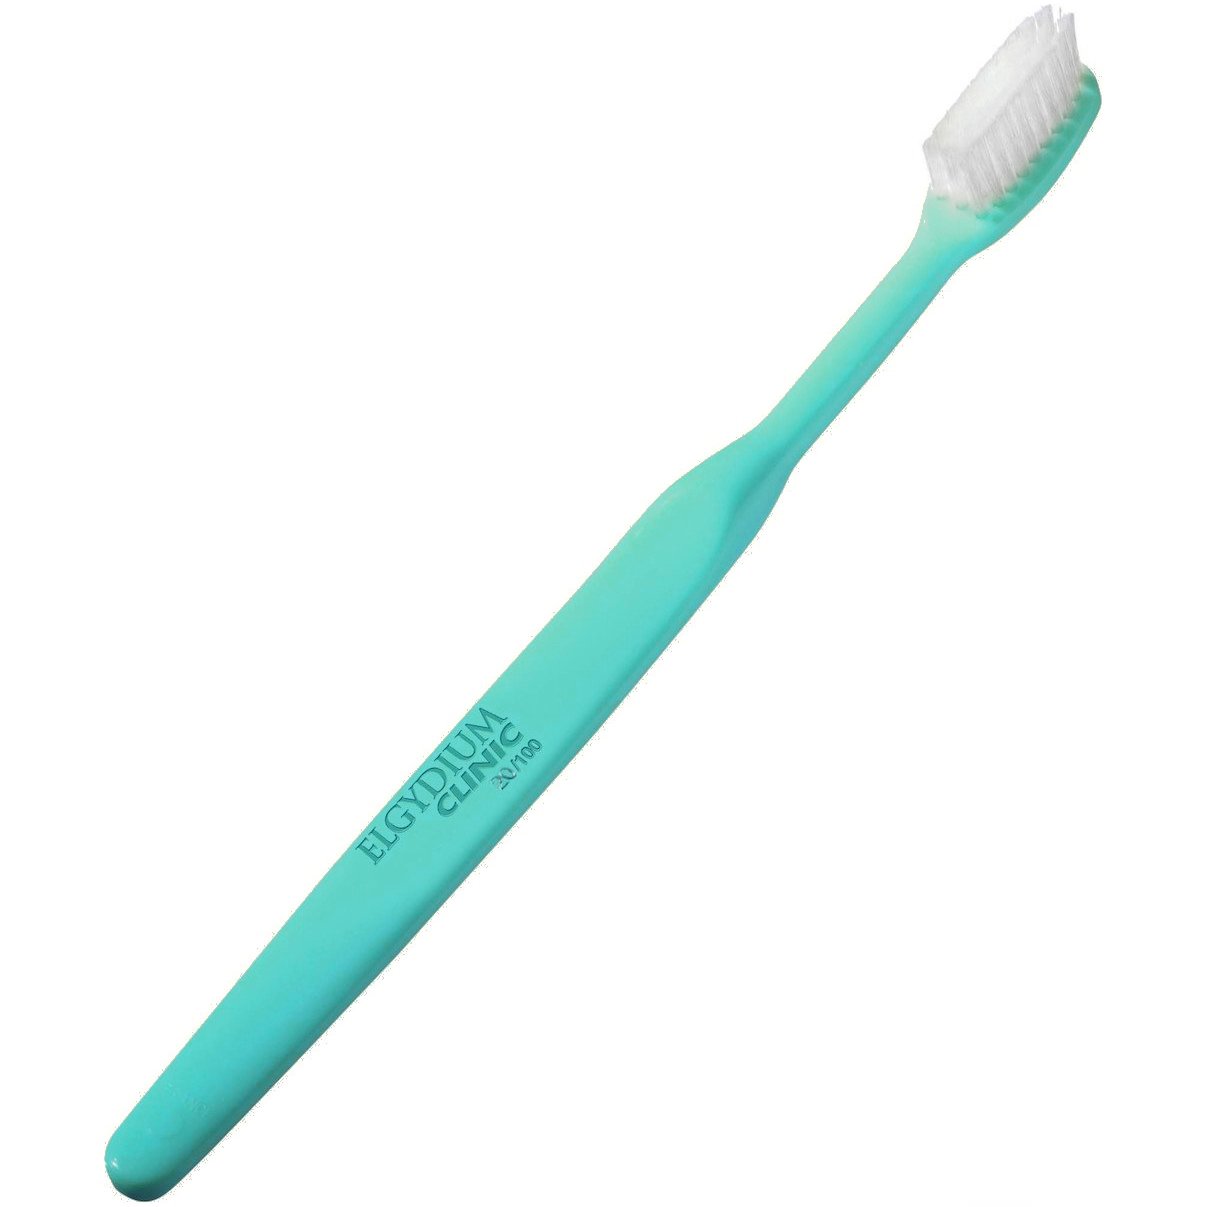 Elgydium Clinic Toothbrush 20/100 Soft Μαλακή Οδοντόβουρτσα Ειδικά Σχεδιασμένη για Μετεγχειρητική Φροντίδα, Περιοδοντίτιδα & για Ευαίσθητα Ούλα 1 Τεμάχιο – Τιρκουάζ